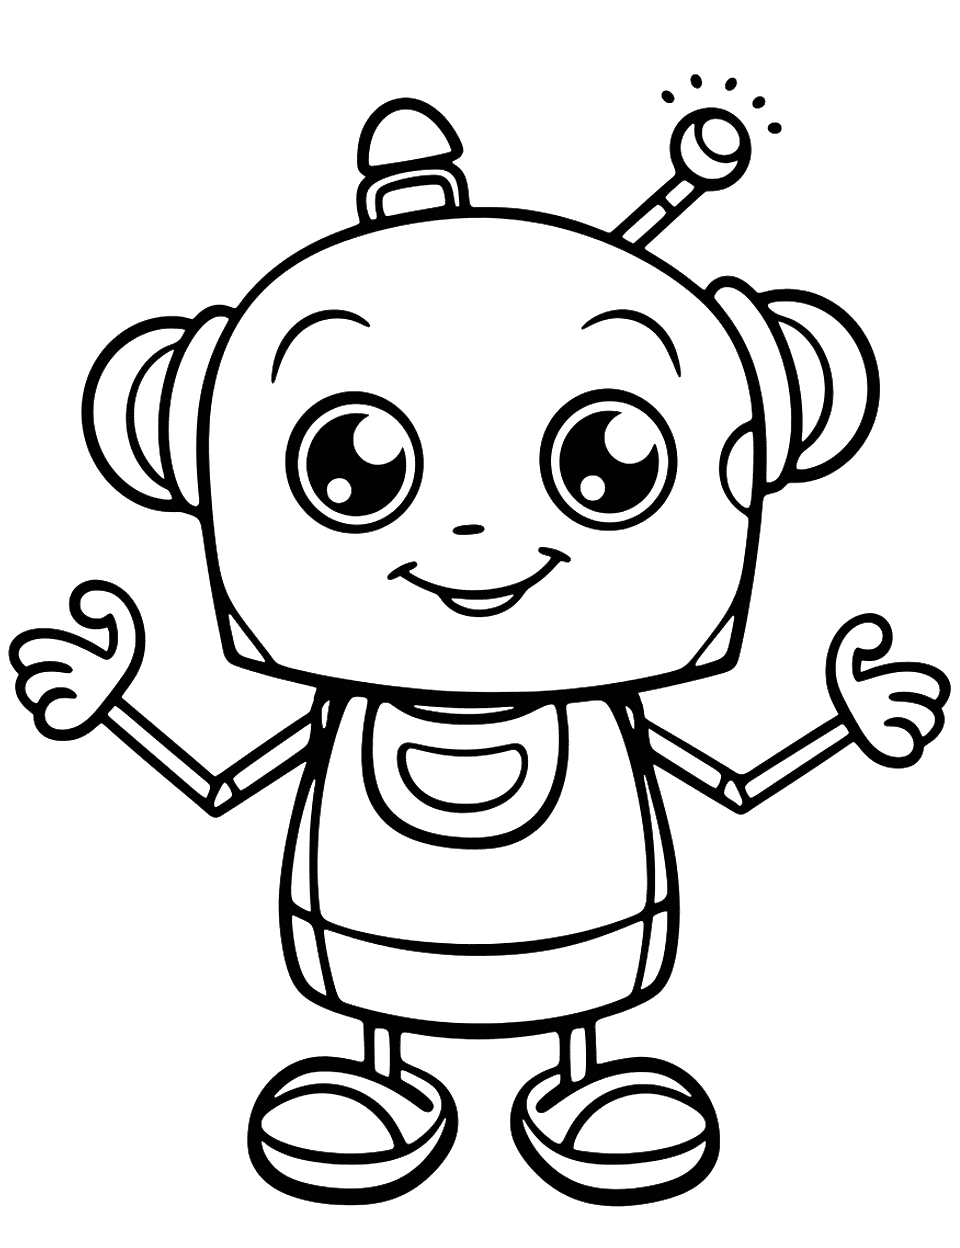 Robot Fun Coloring Page - A friendly robot waving hello.